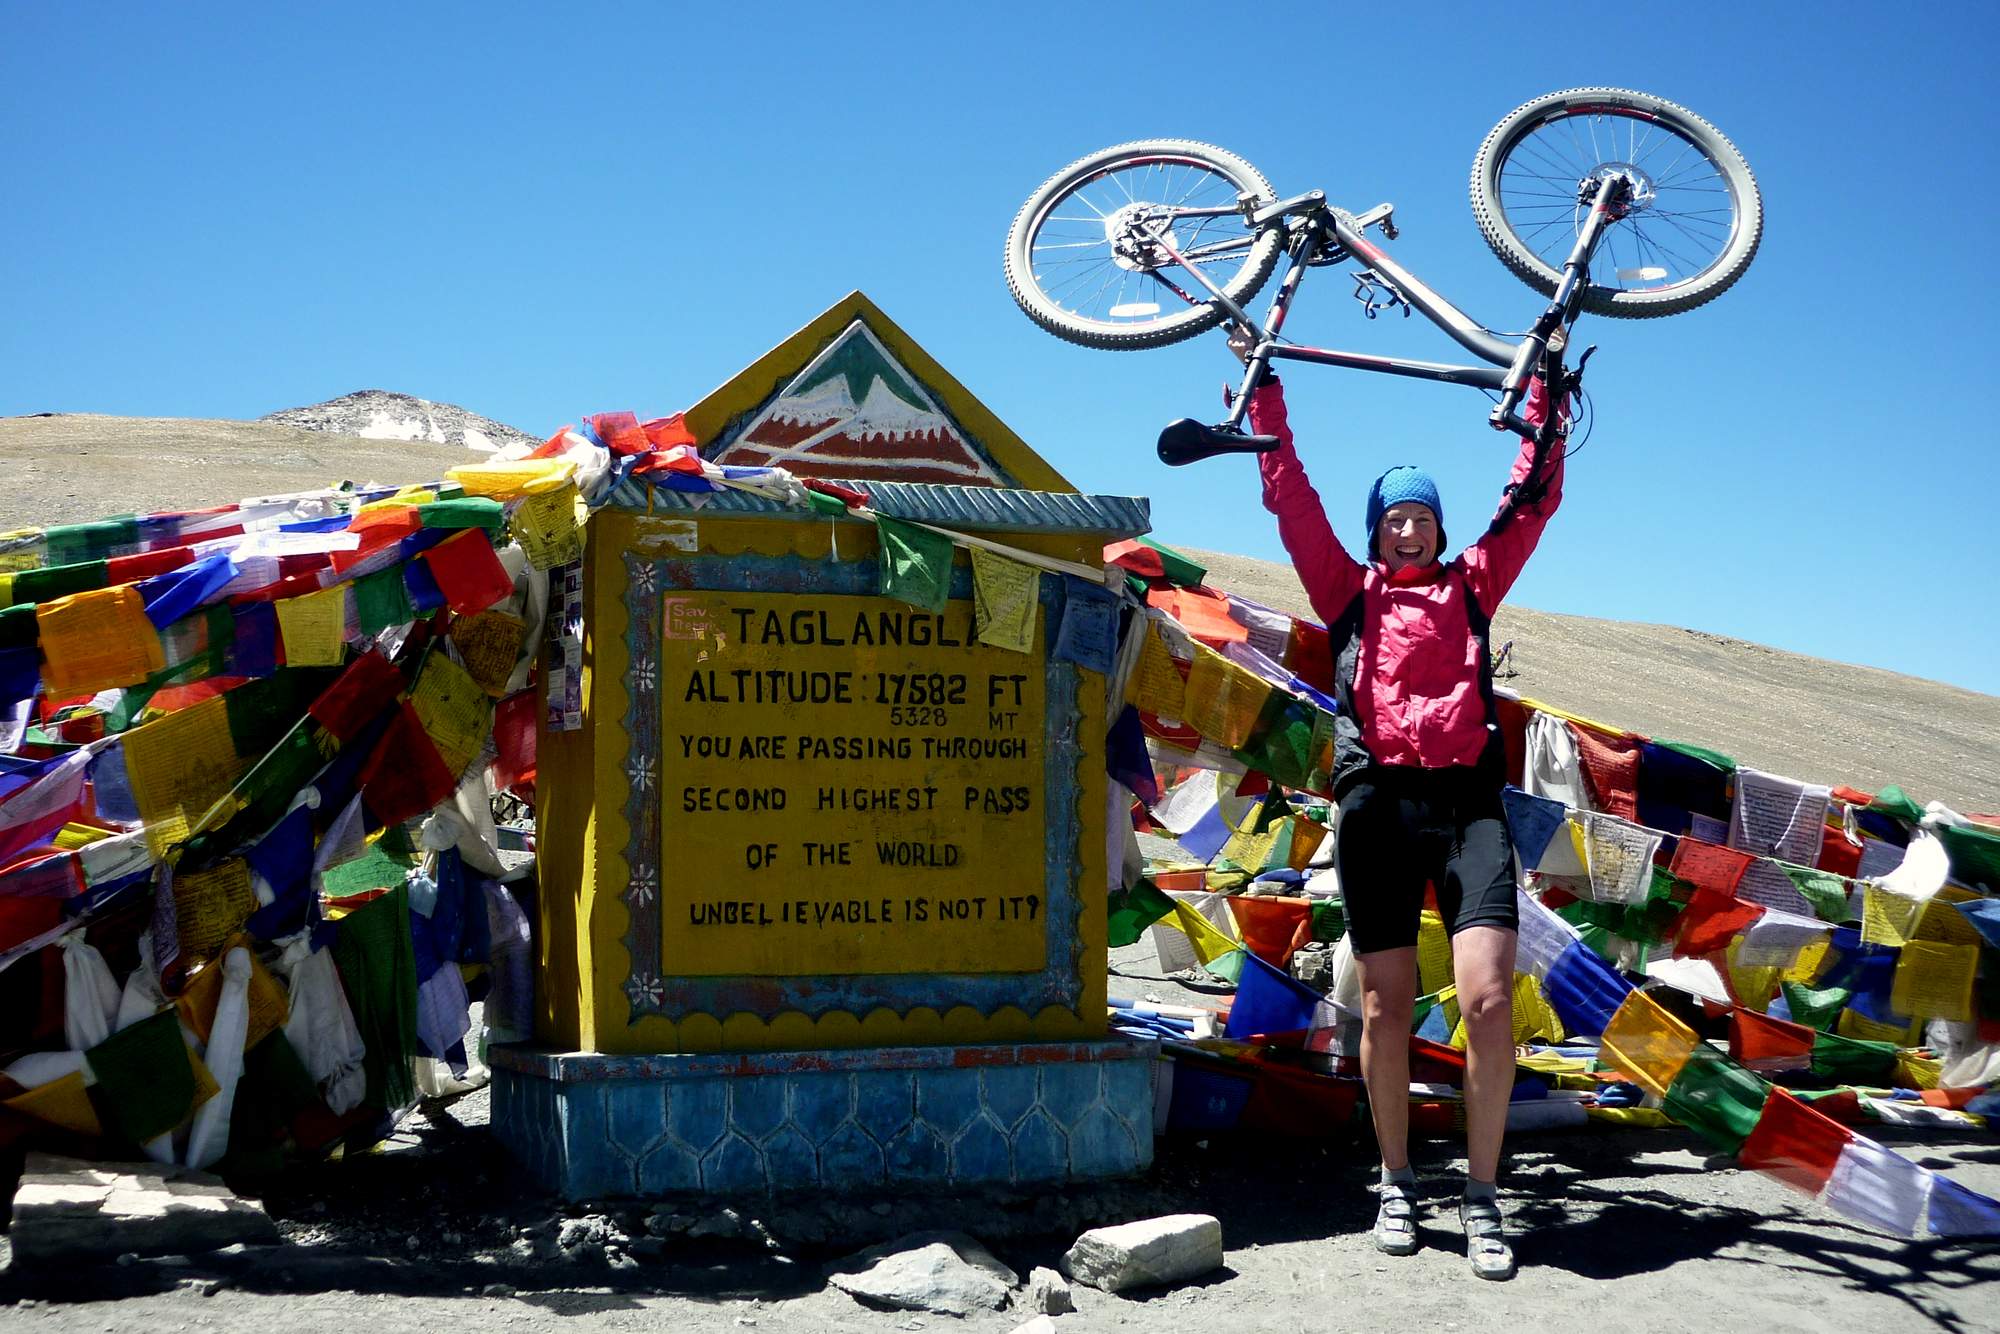 cycling Tanglangla Pass 17,582 FT